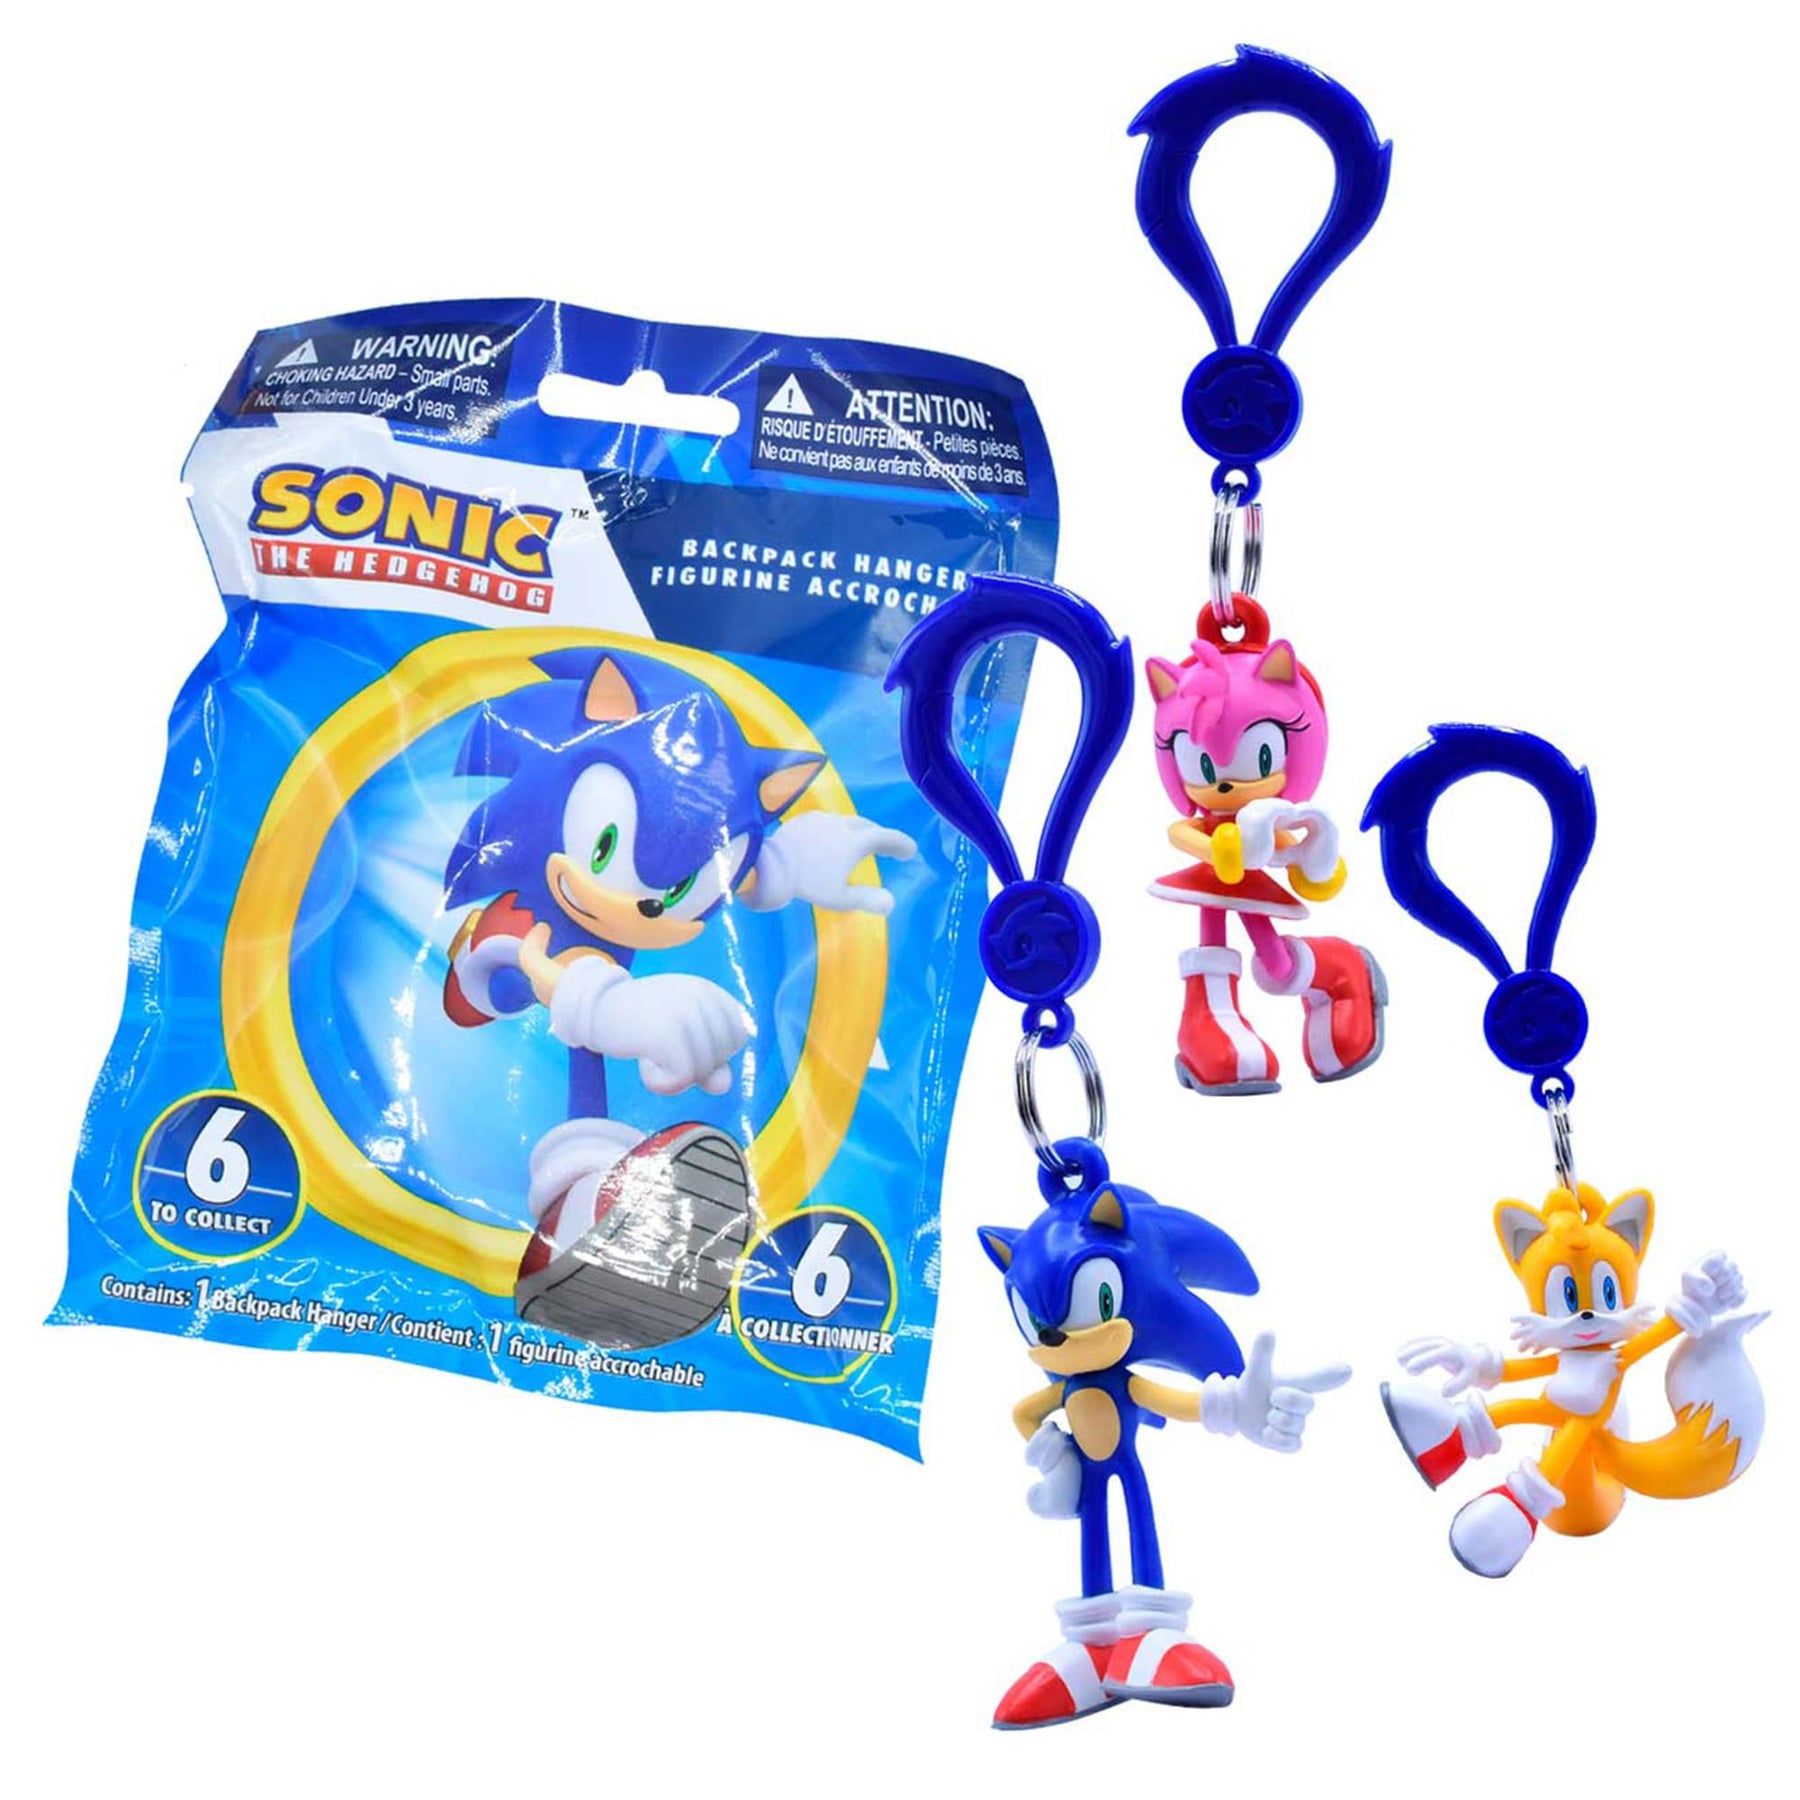 Sonic the Hedgehog Series 3 Mystery Backpack Hanger | One Random Blind Bag